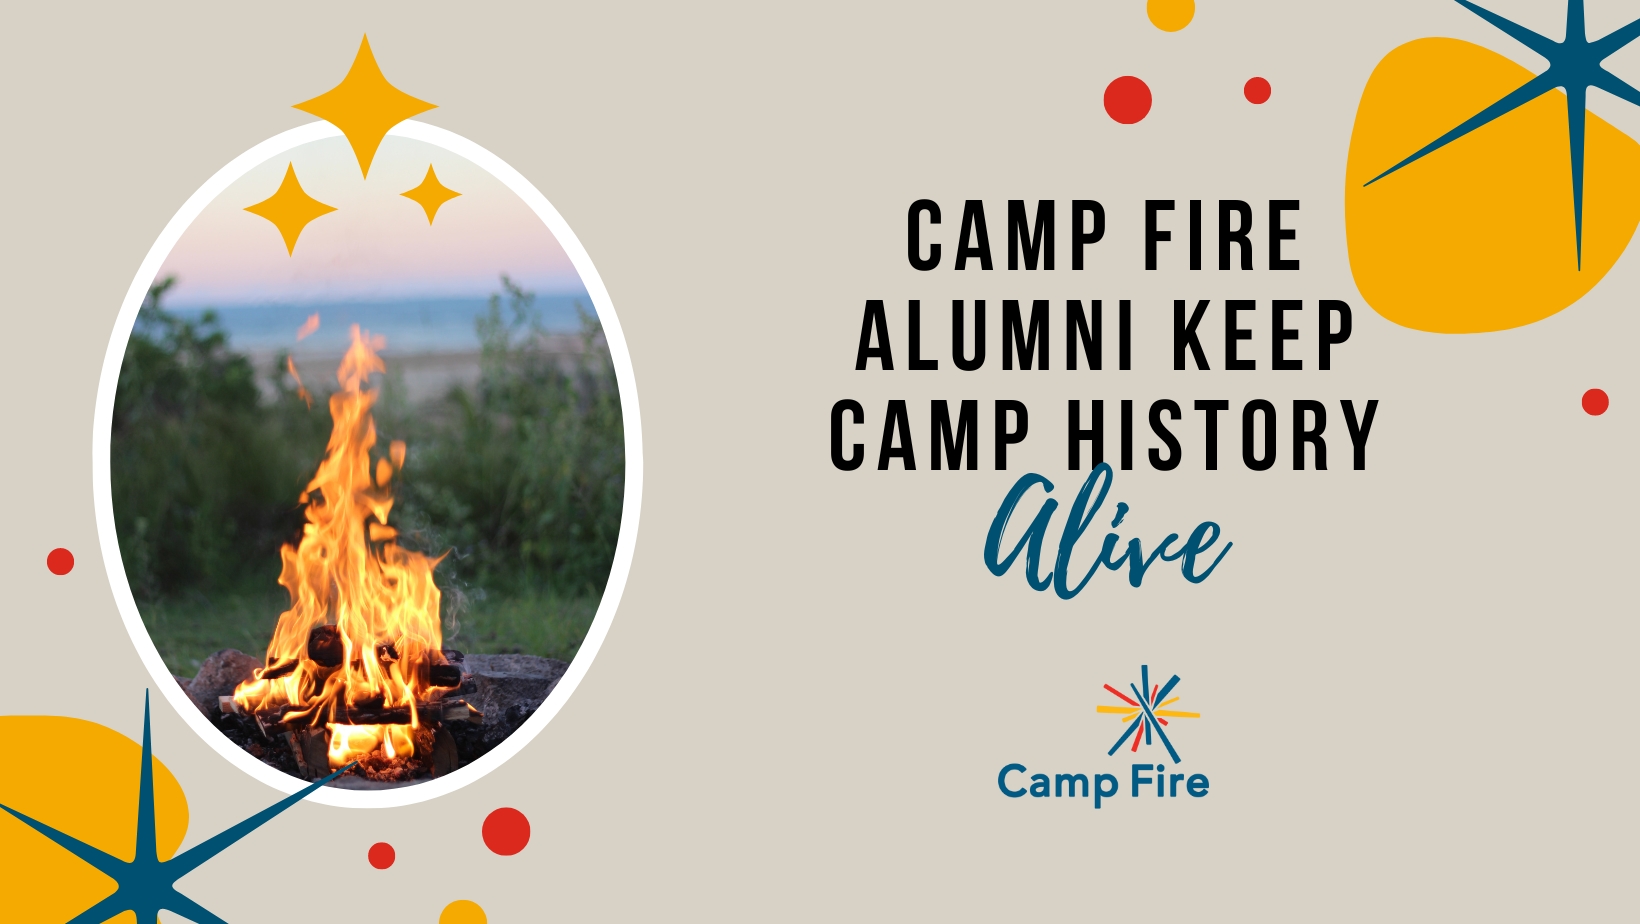 Camp Fire Alumni Keep Camp History Alive, a Camp Fire blog